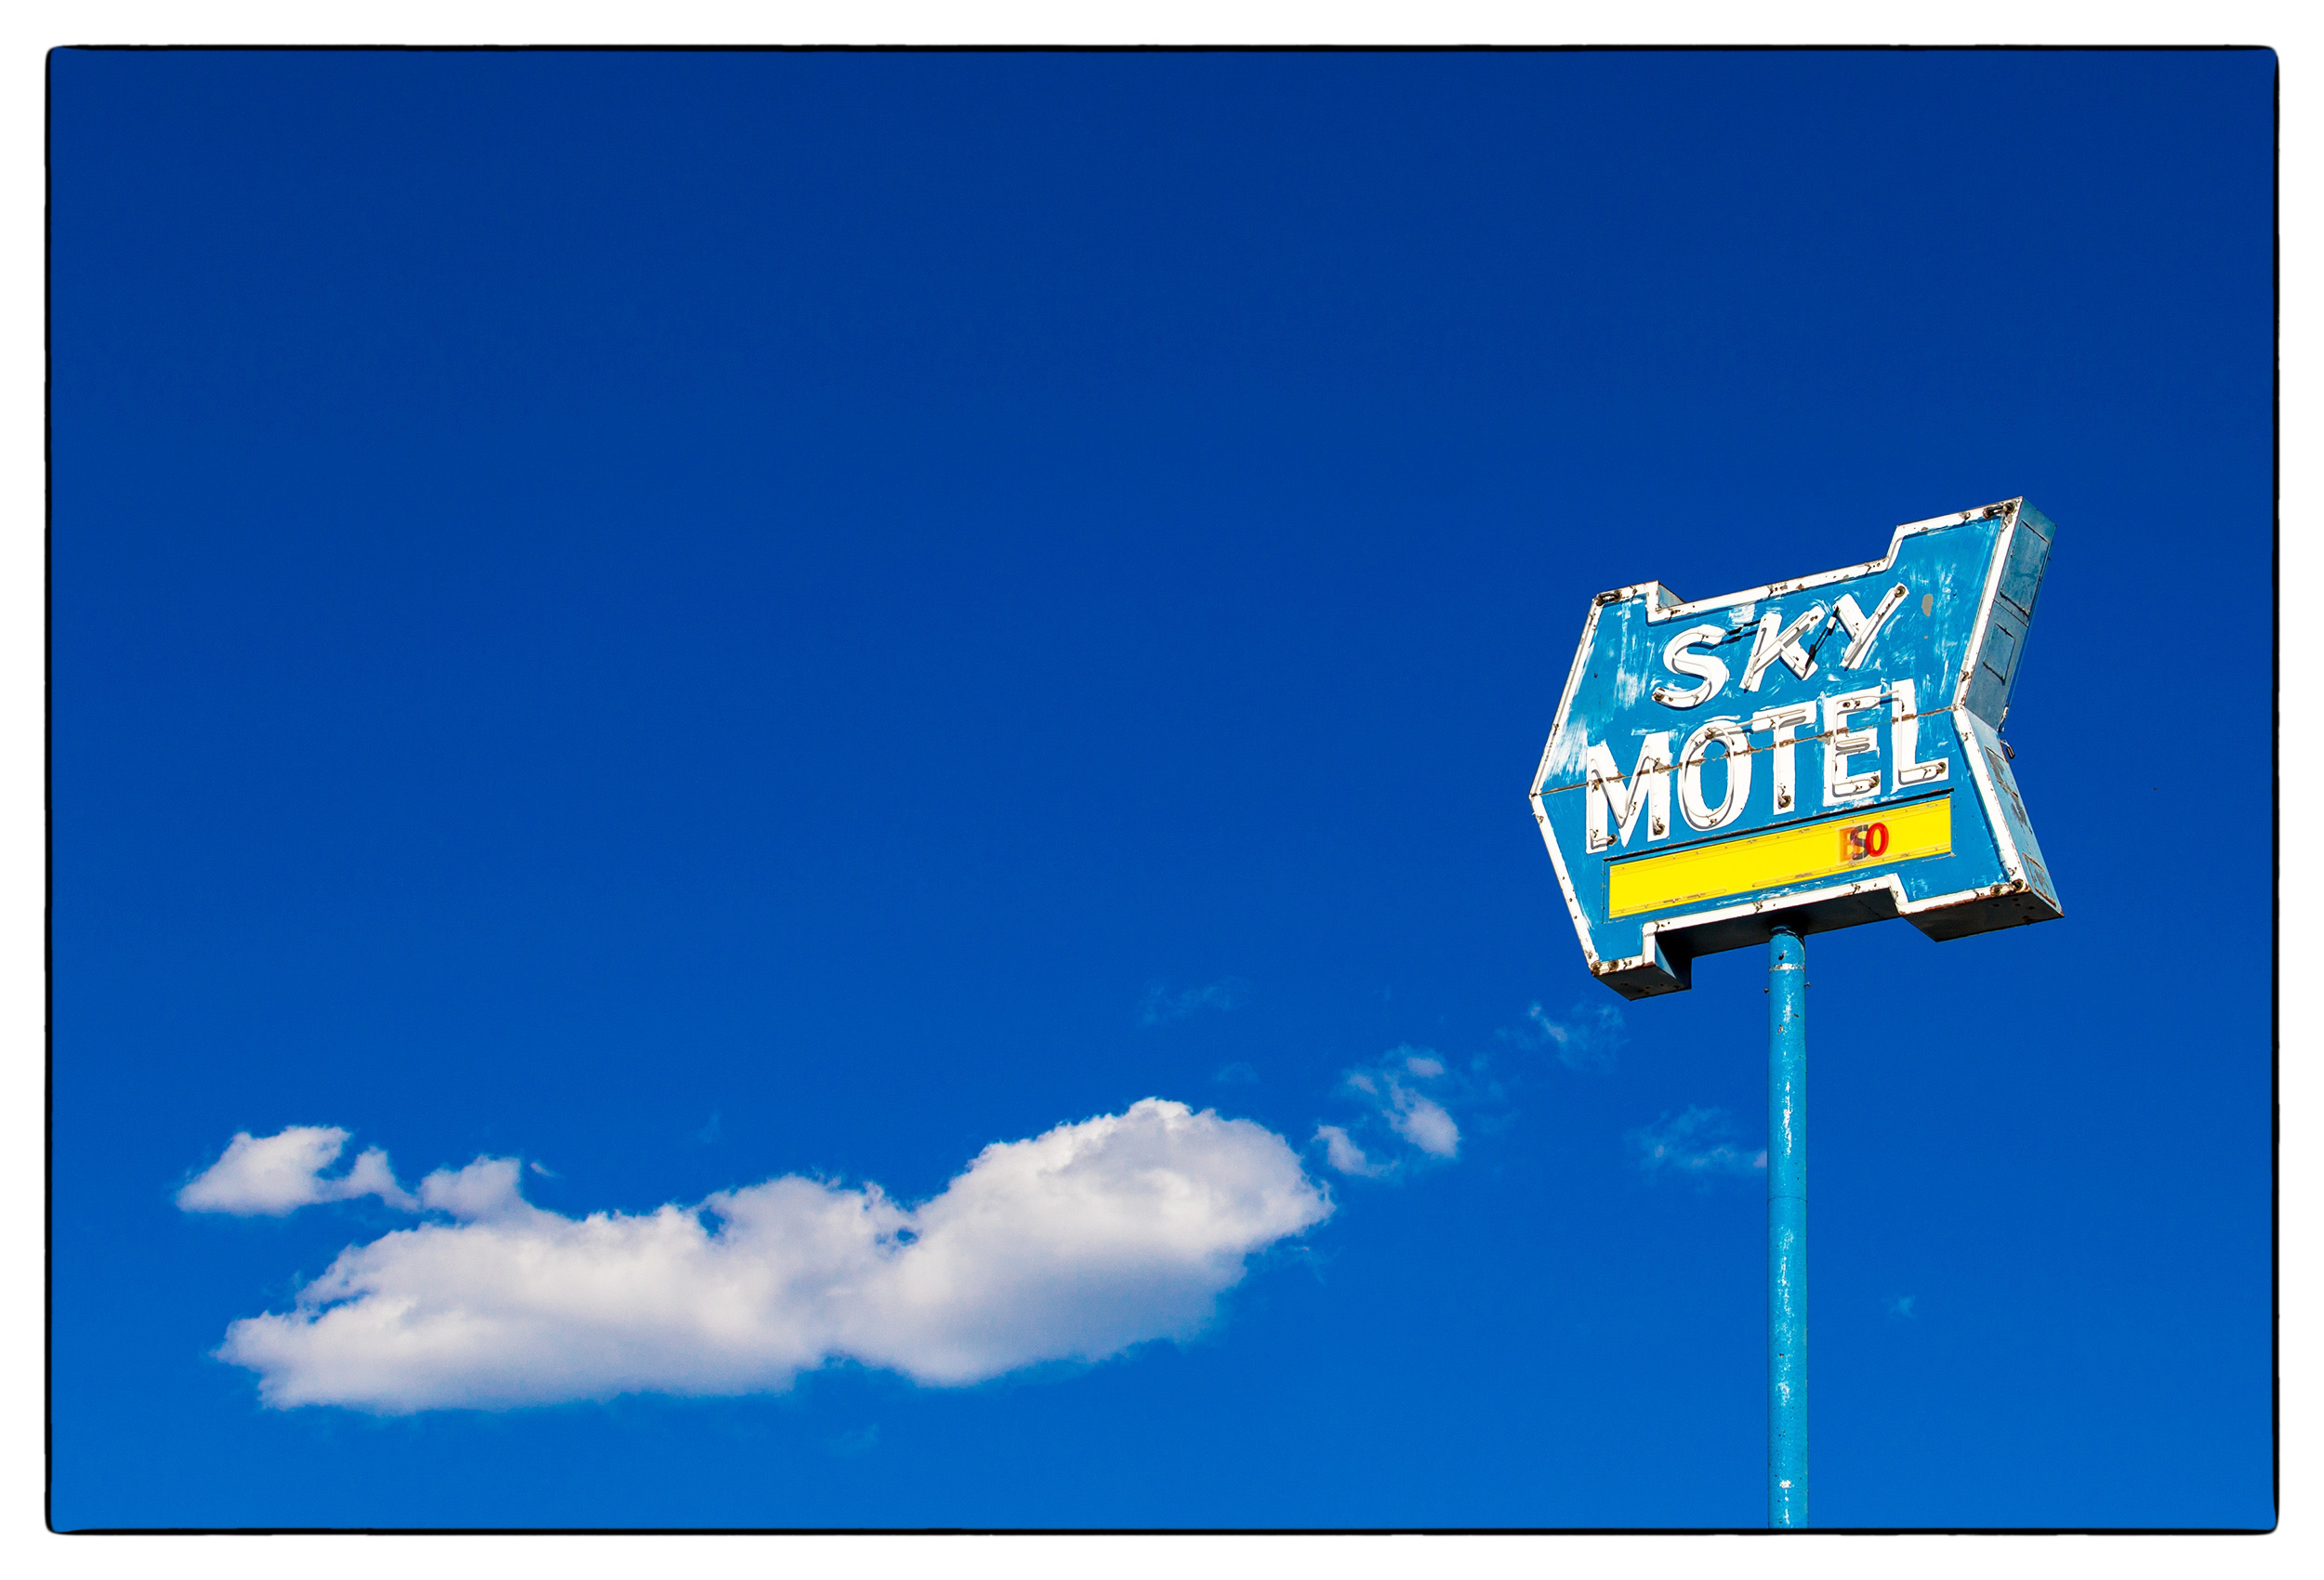 a-sky-motel-sign-against-a-deep-blue-sky-backdrop-in-south-dakota